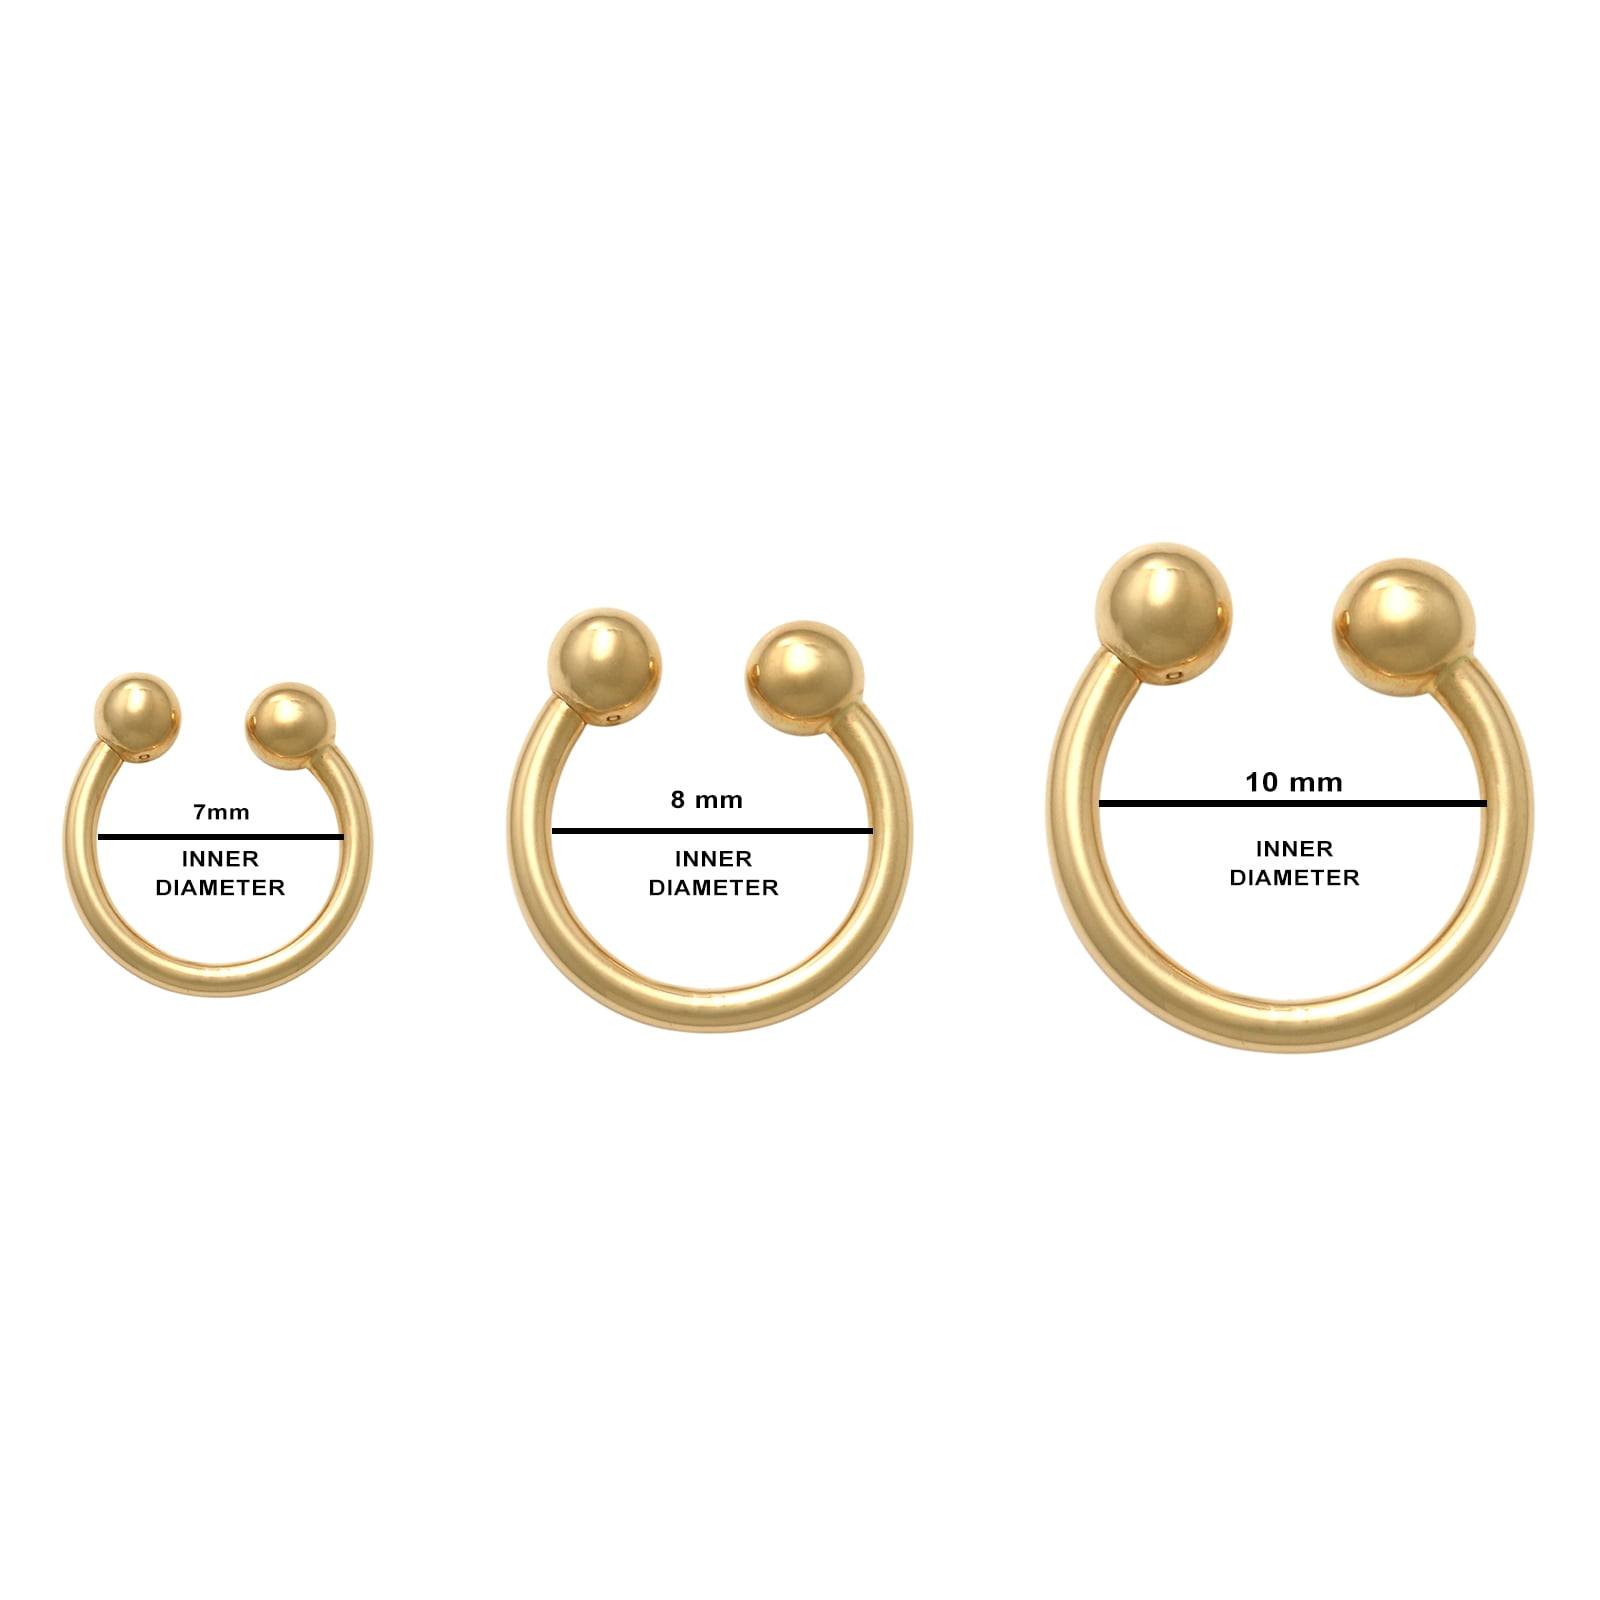 BALL END 10k Solid Yellow Gold Nose Ring/Hoop Earring 24 Gauge 8mm Inner Diametr 